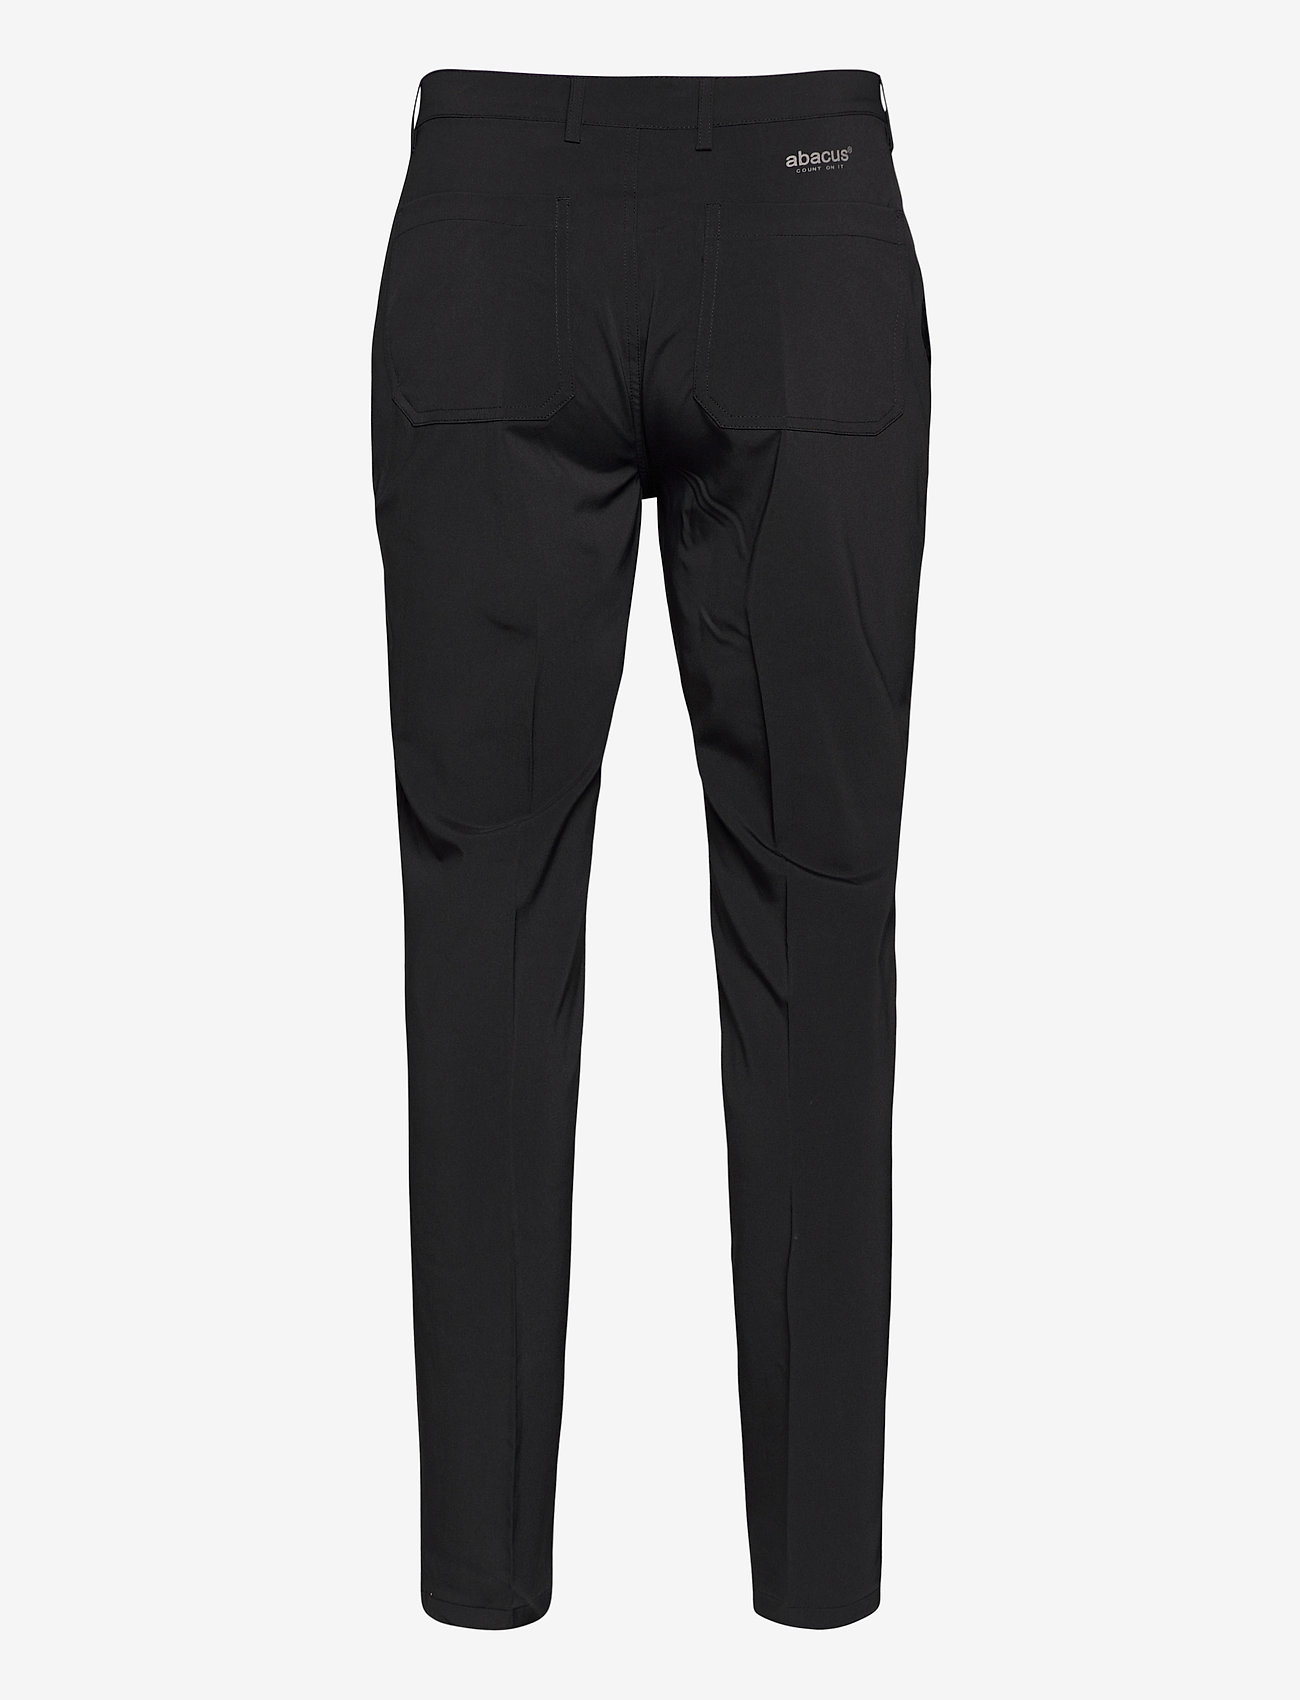 Abacus - Mens Cleek stretch trousers - golf pants - black - 1